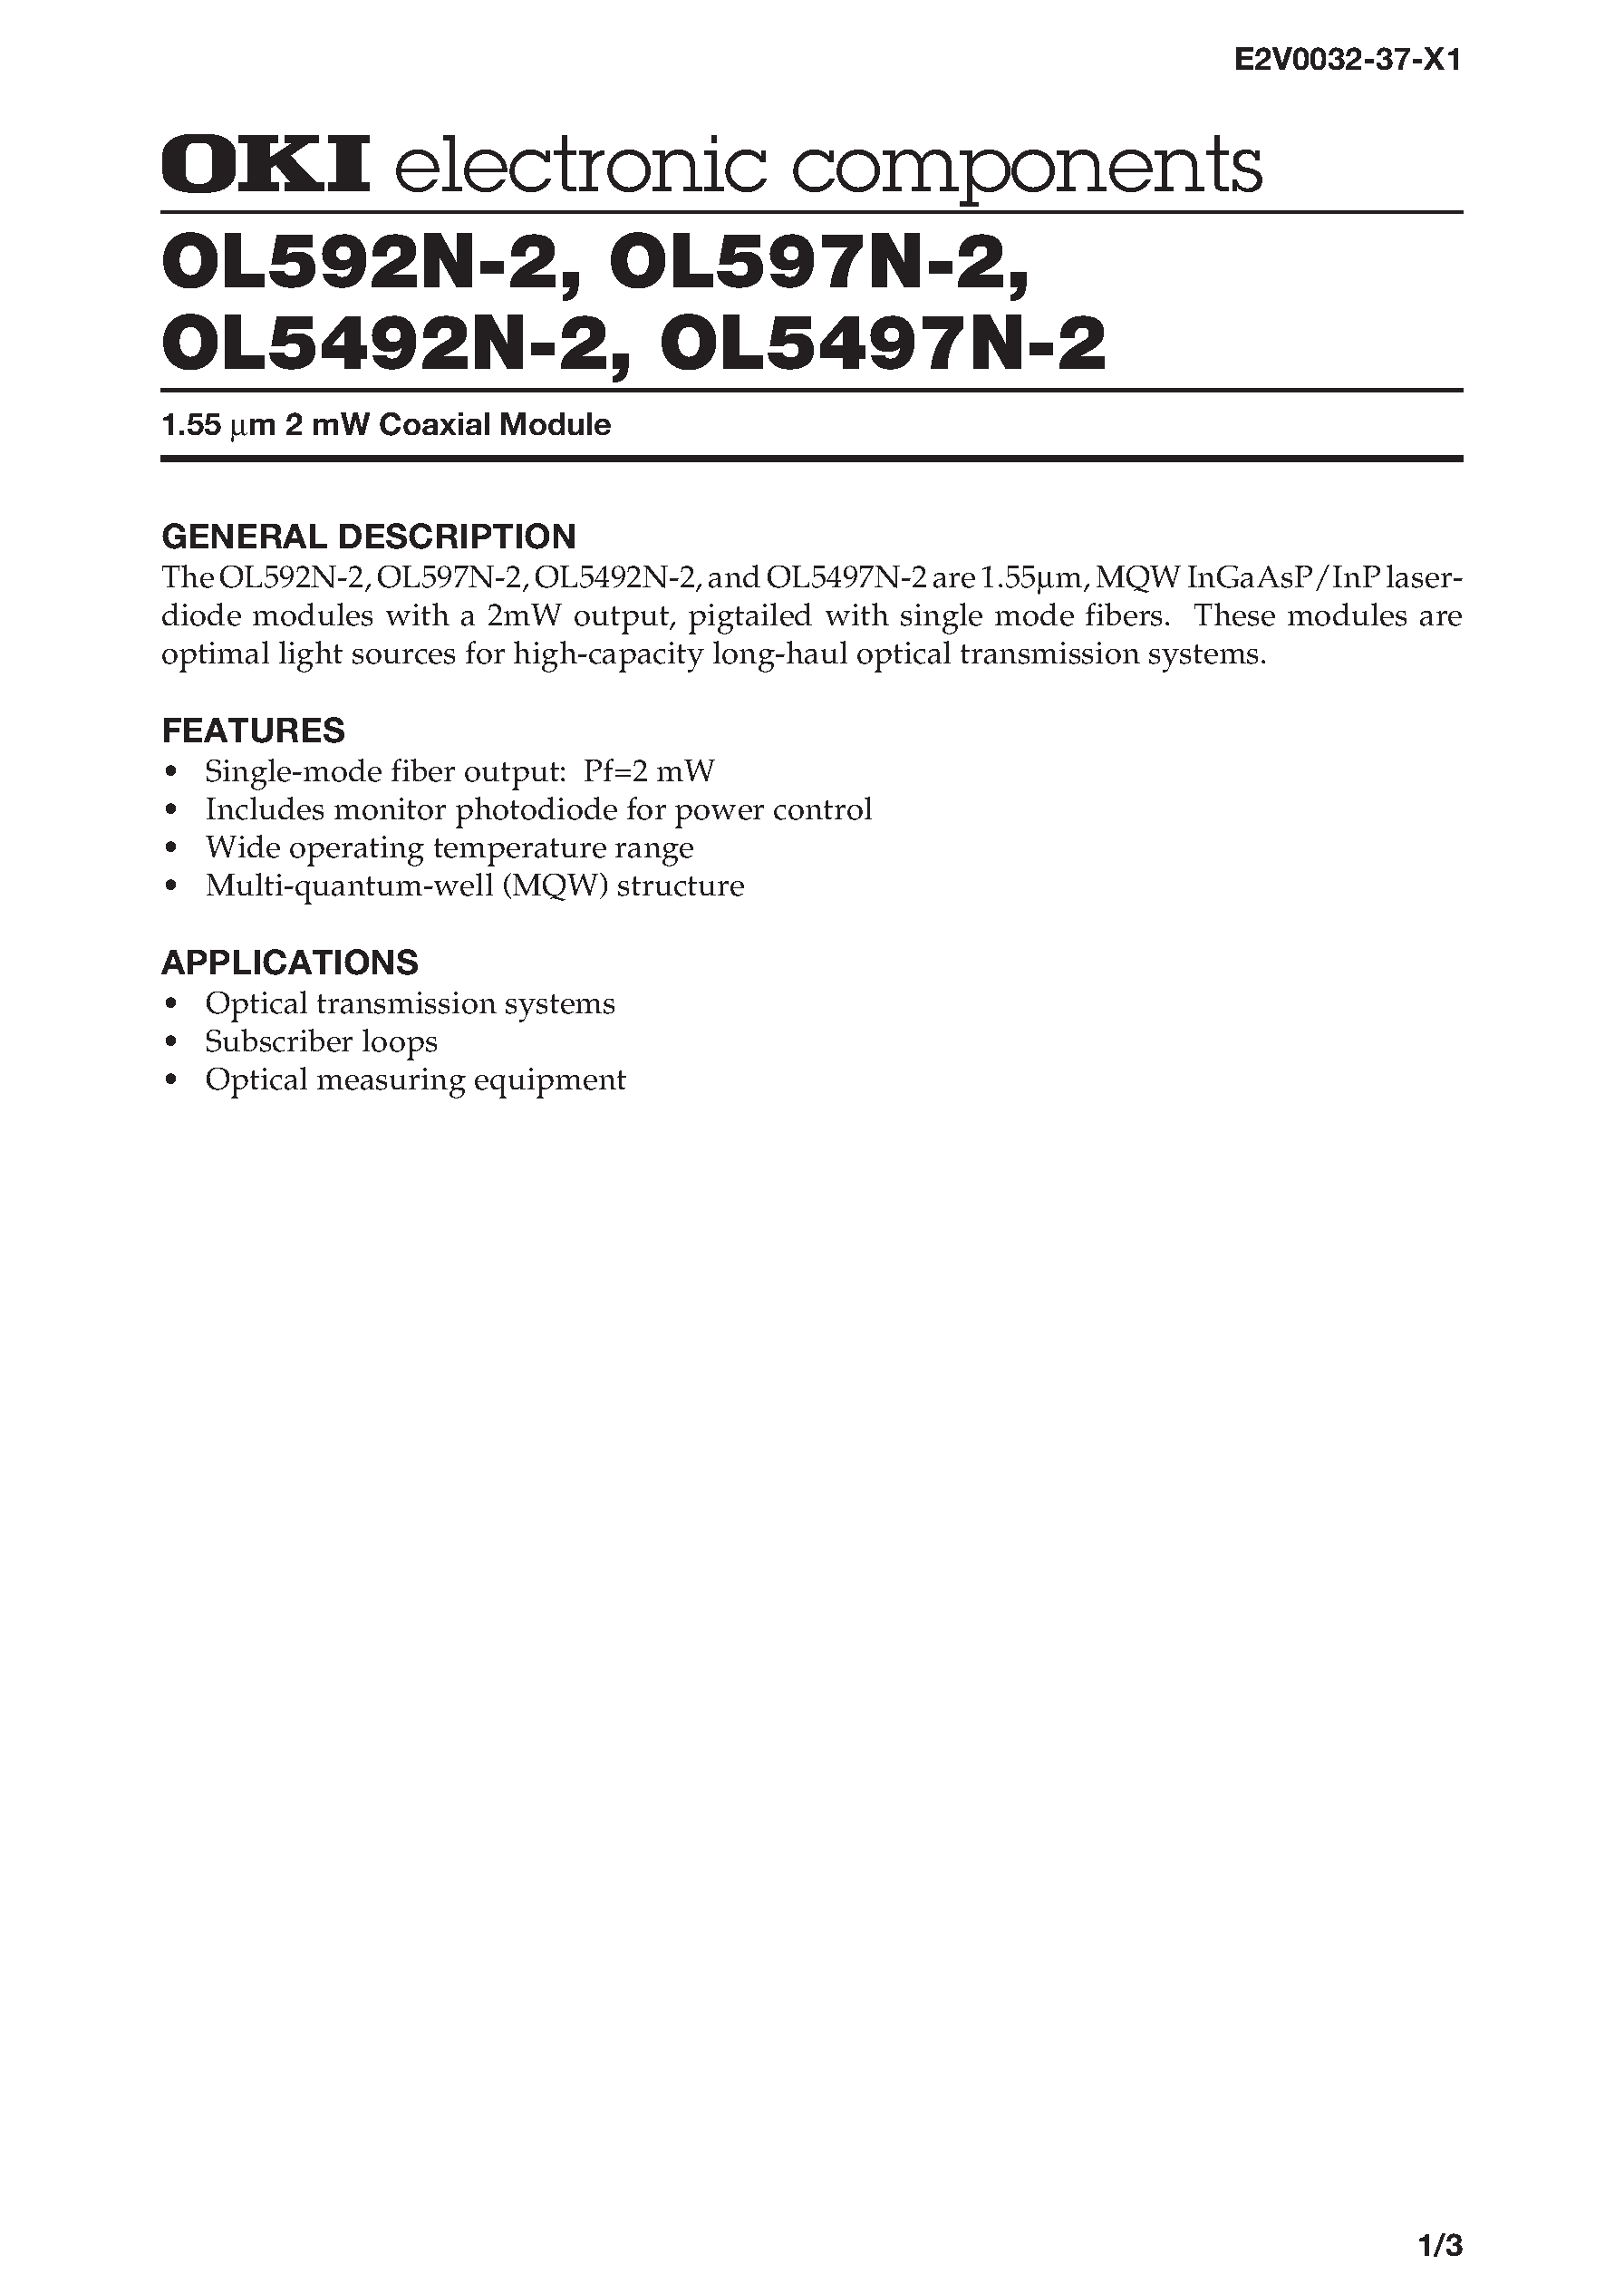 Datasheet OL592N-2 - 1.55 m 2 mW Coaxial Module page 1